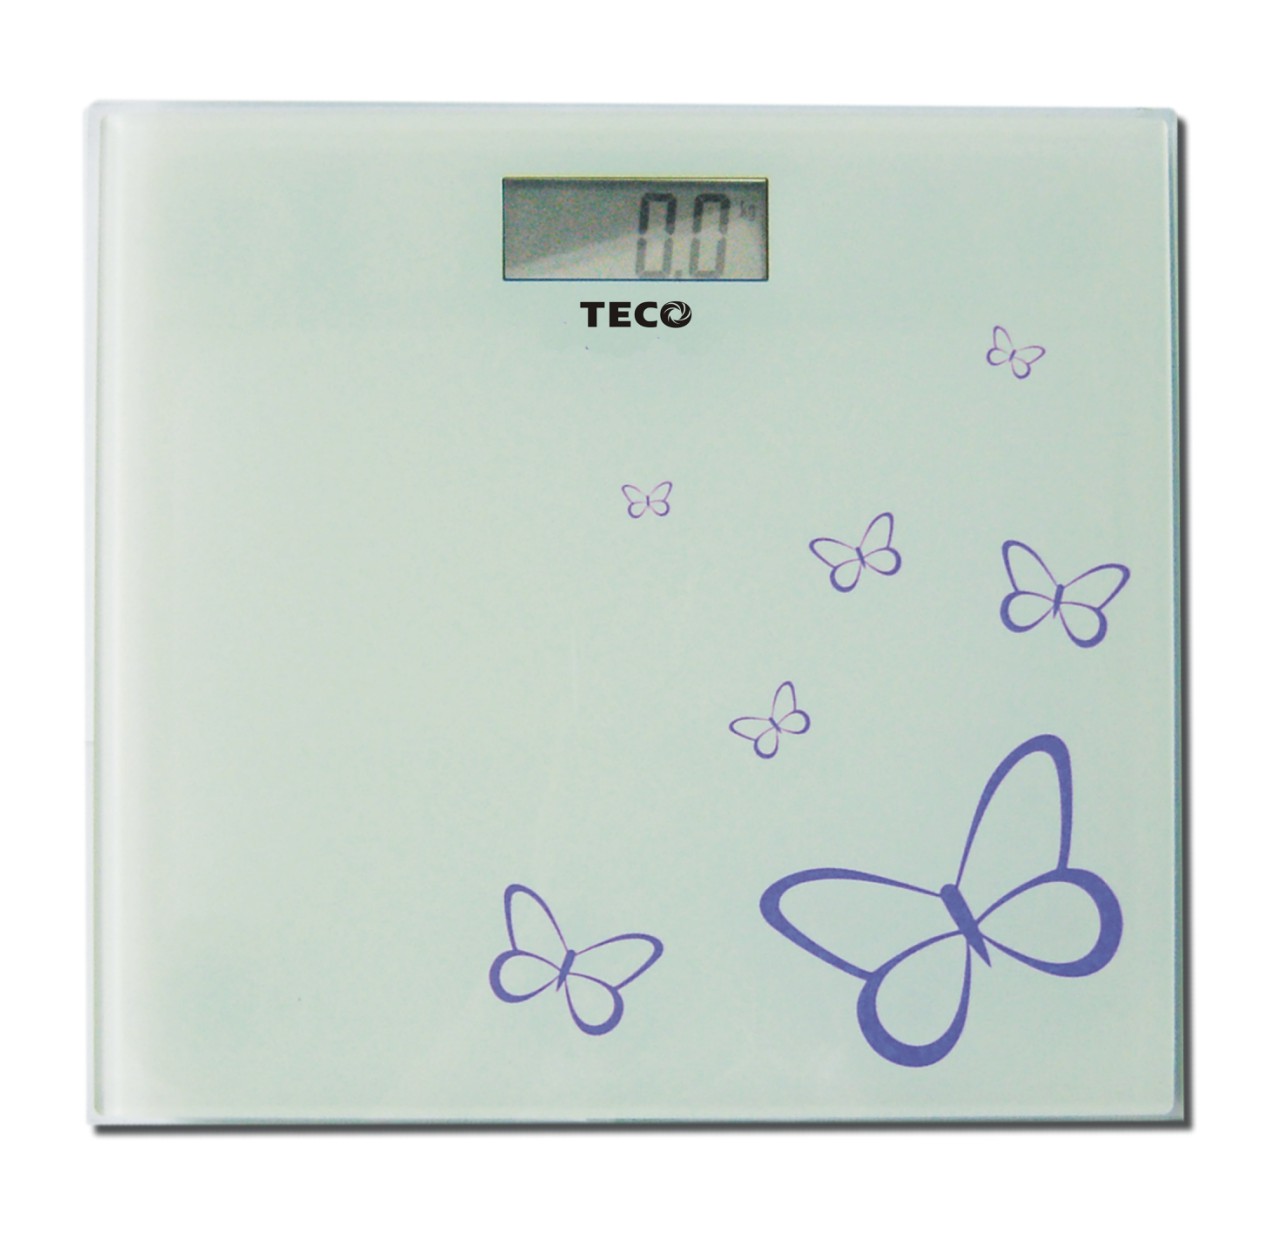 【SunEasy生活館】TECO 東元電子體重計(XYFWT381)/強化玻璃/電子秤/人體秤  